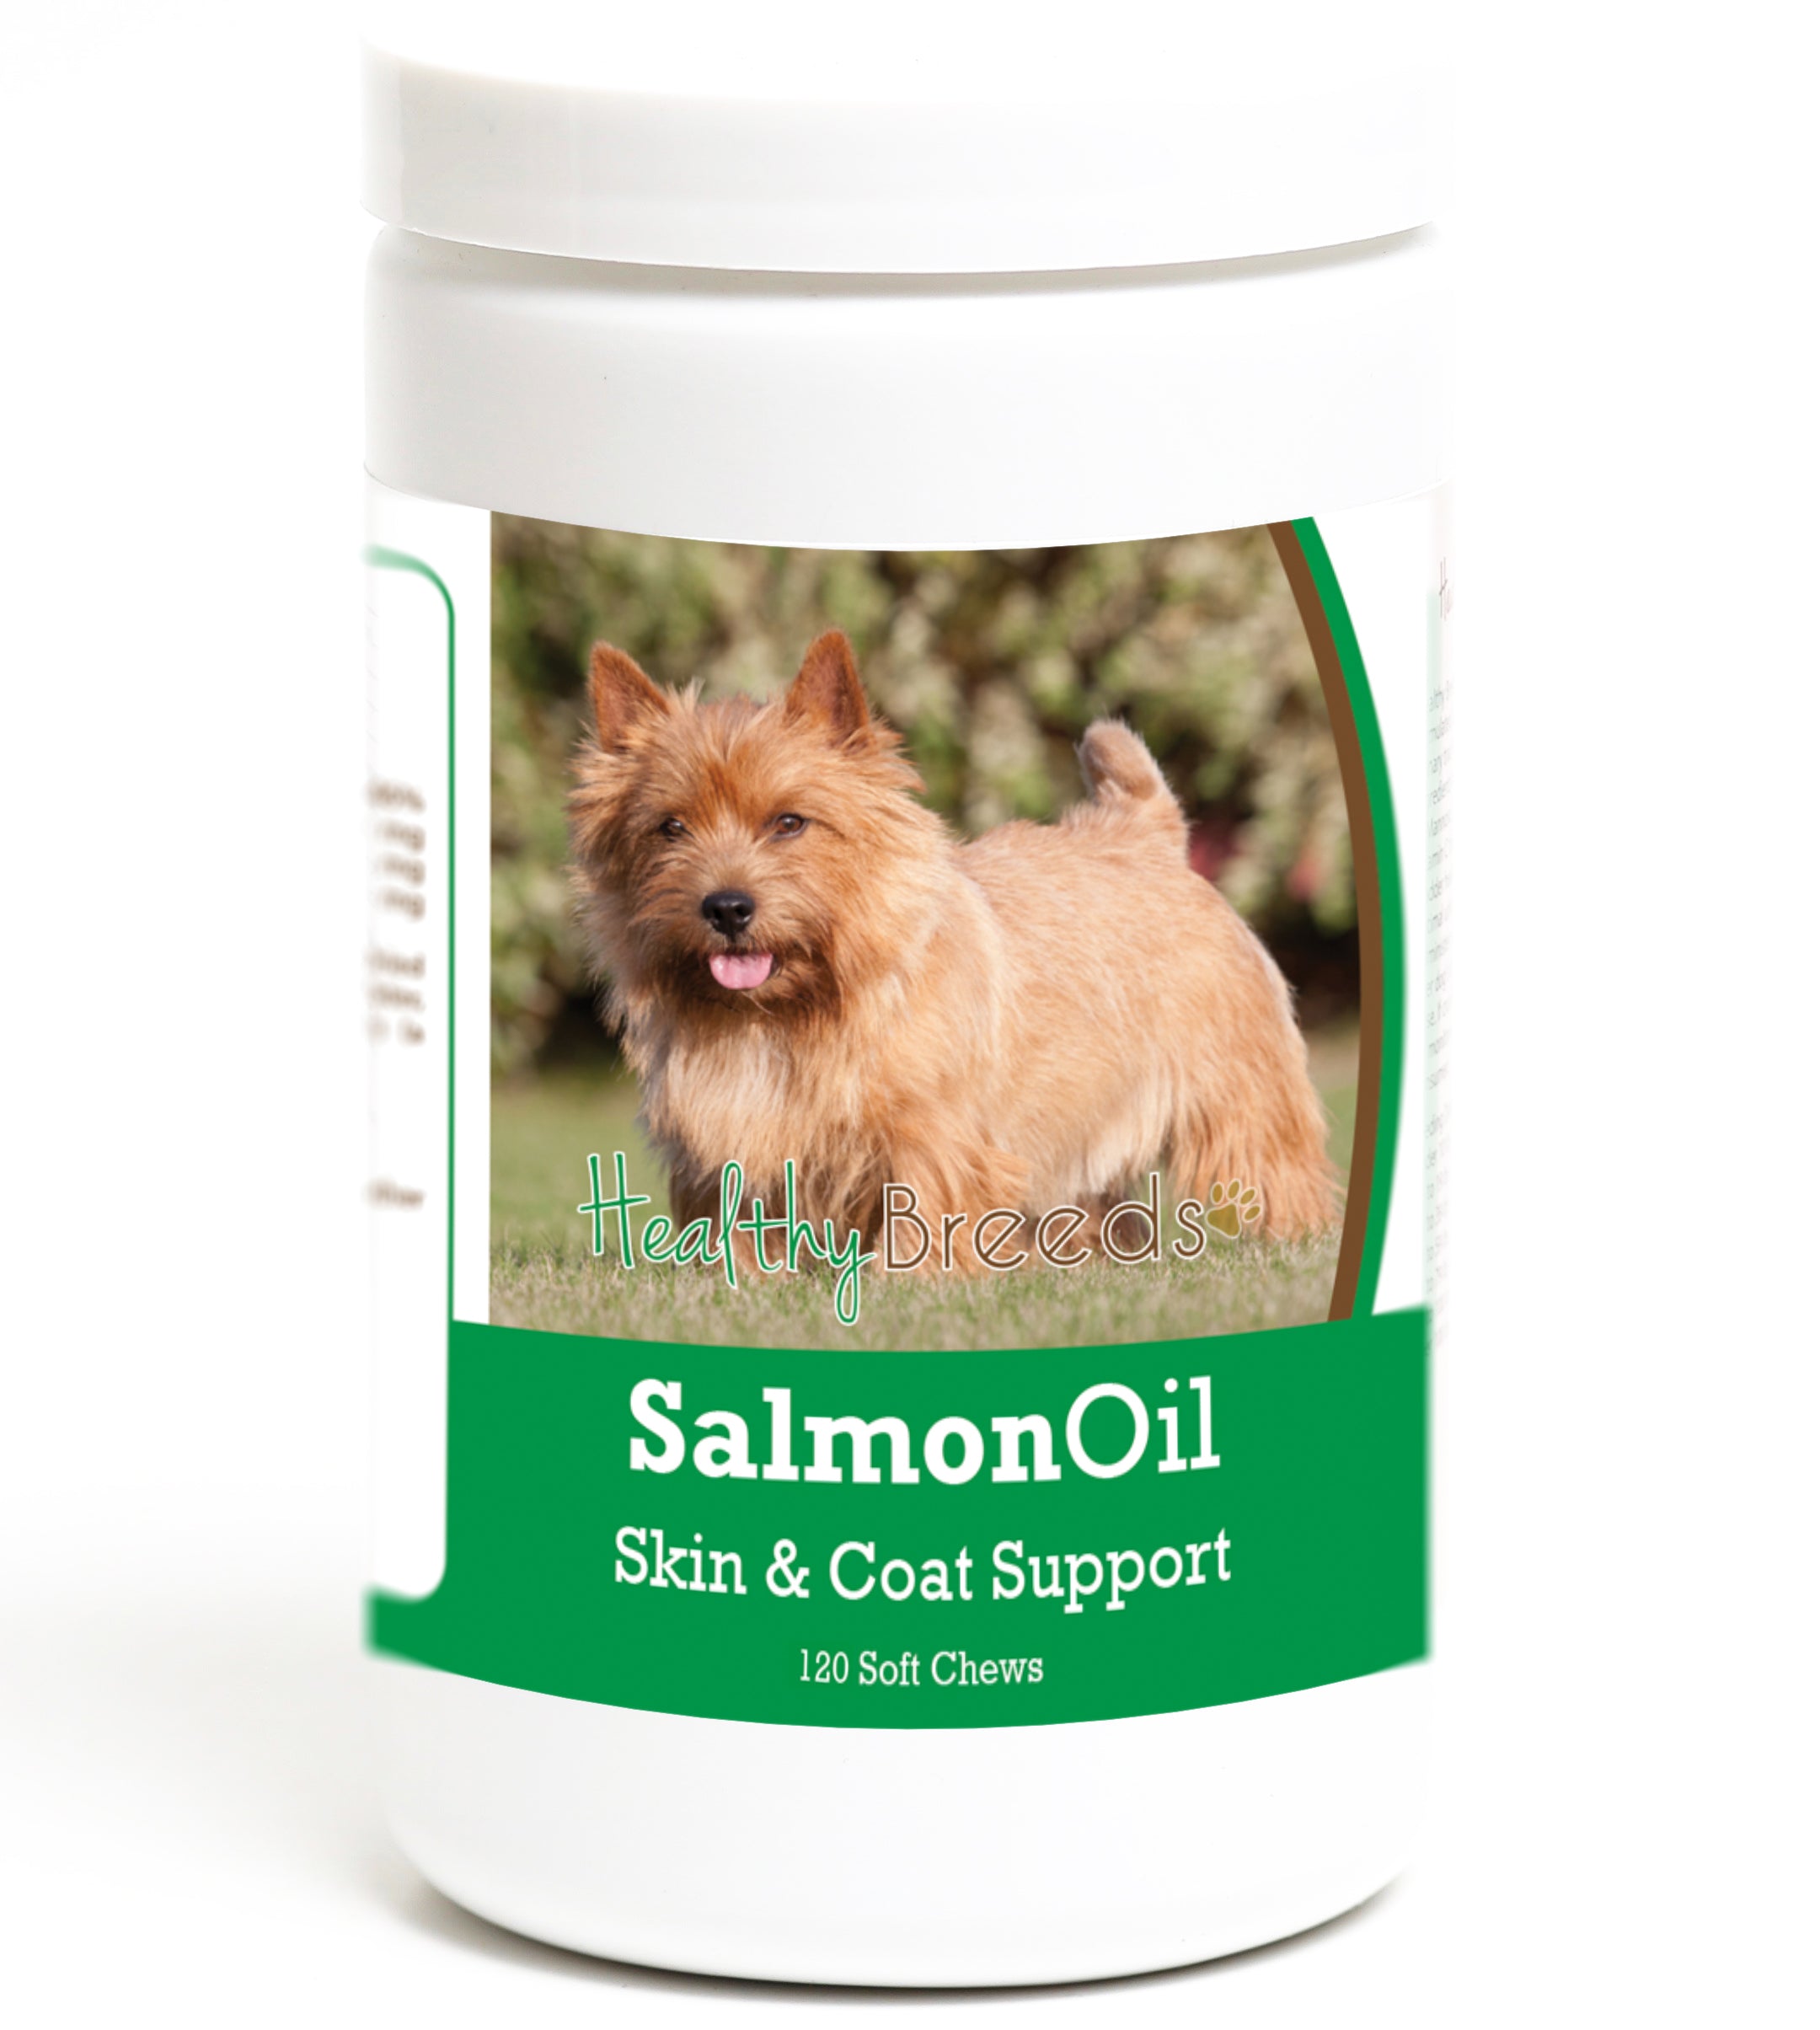 Norwich Terrier Salmon Oil Soft Chews 120 Count